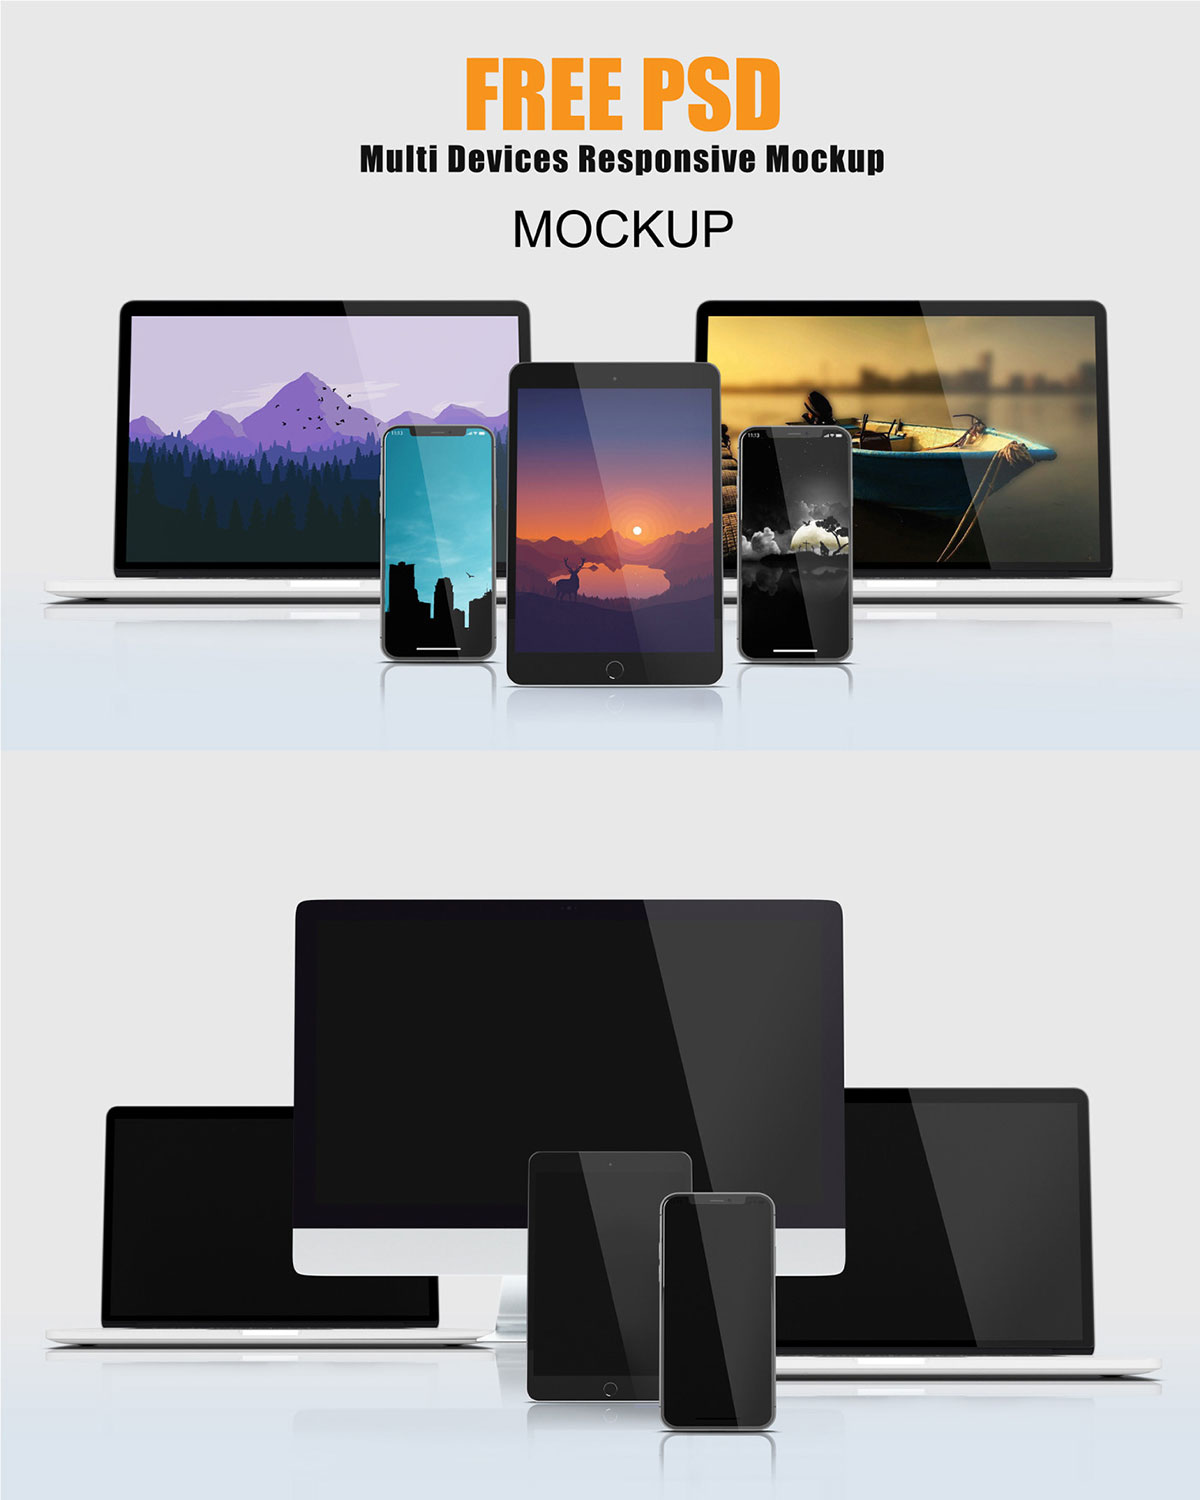 Free Multi Devices Responsive Mockup